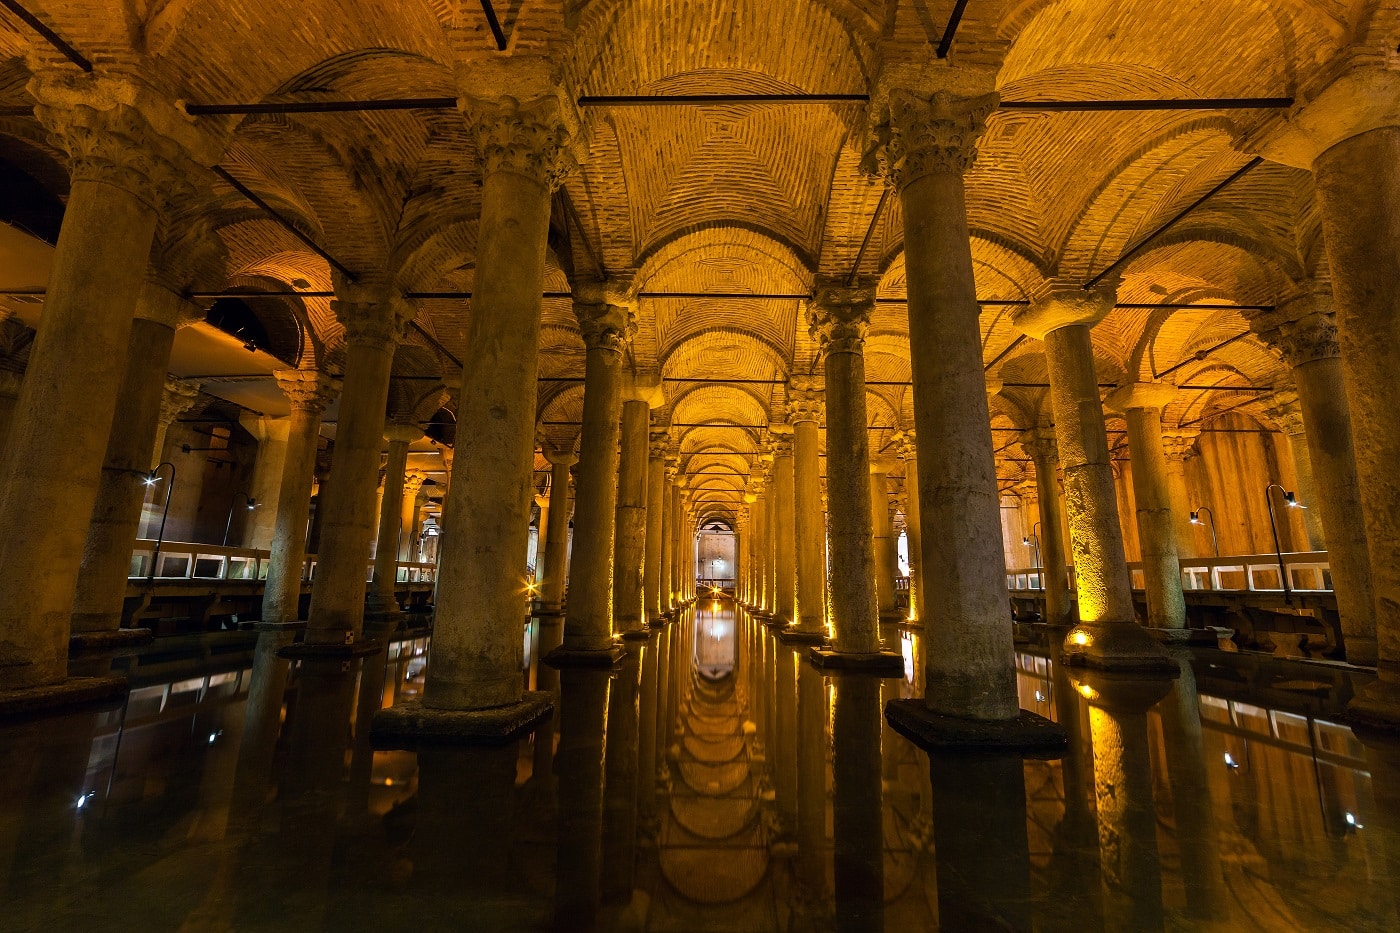 The Basilica Cistern - underground water reservoir build by Emperor Justinianus in 6th century, Istanbul, Turkey.